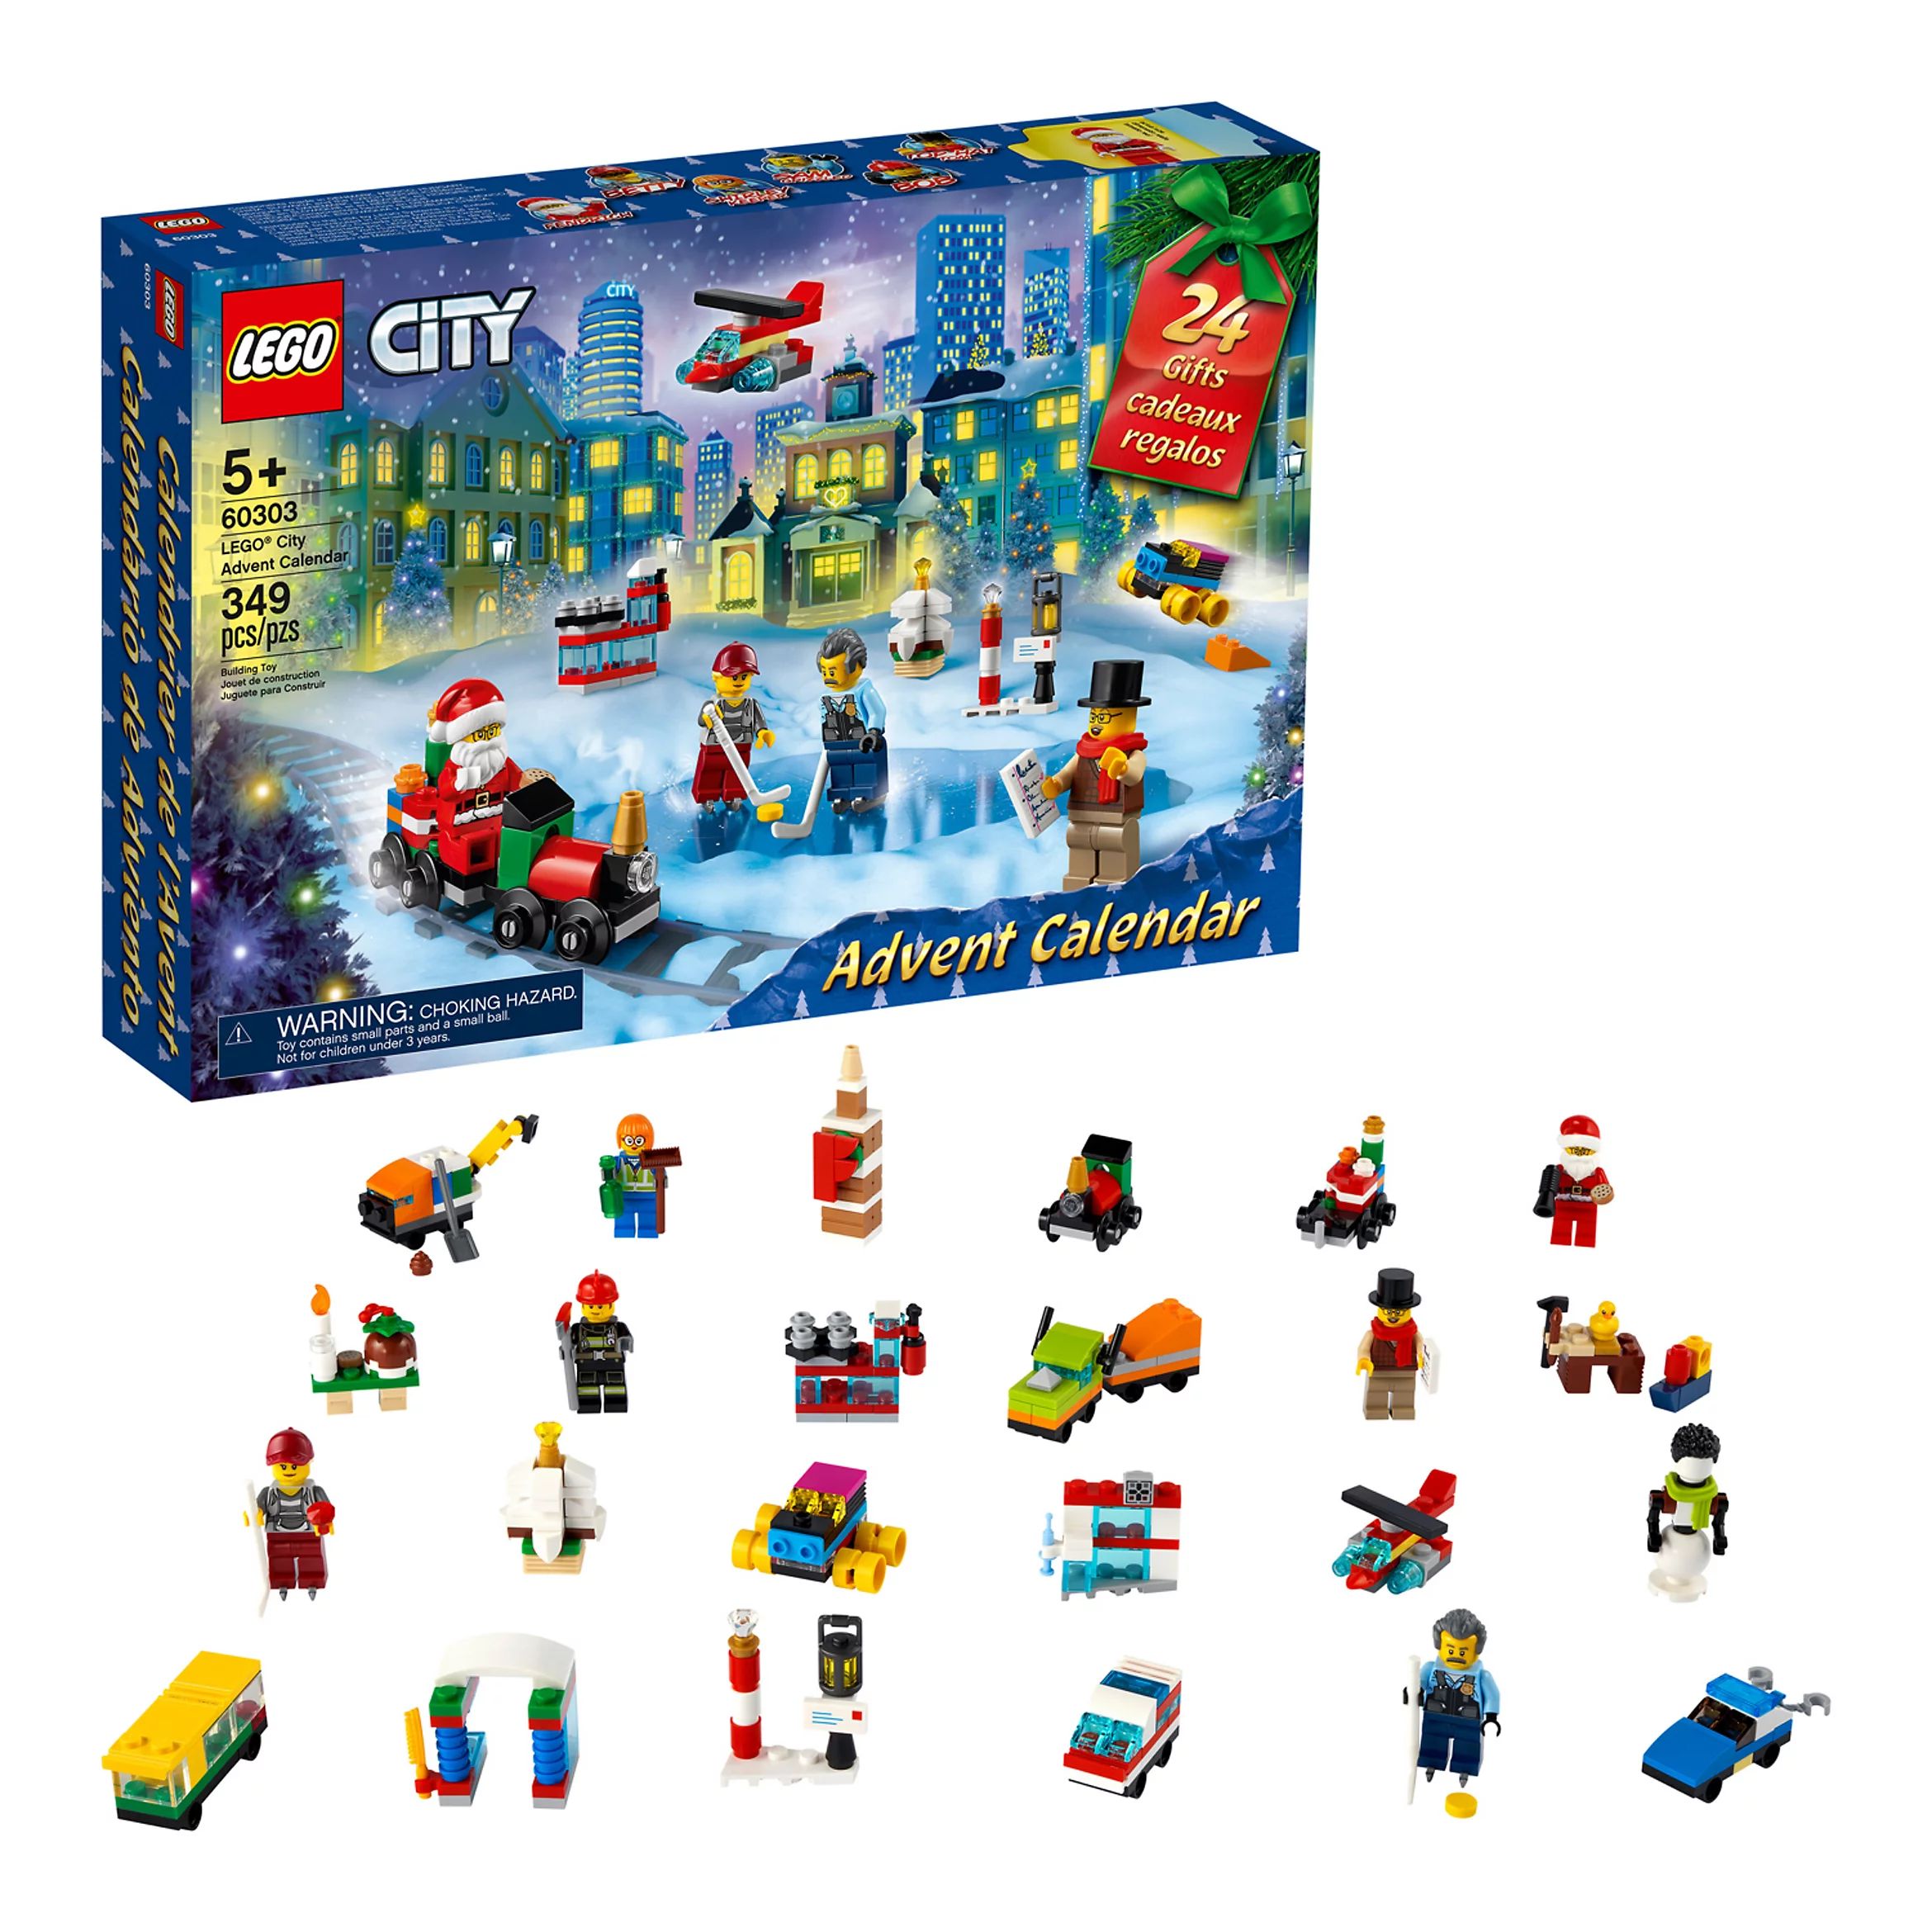 LEGO City Advent Calendar Building Kit 60303 (349 Pieces) | Kohl's